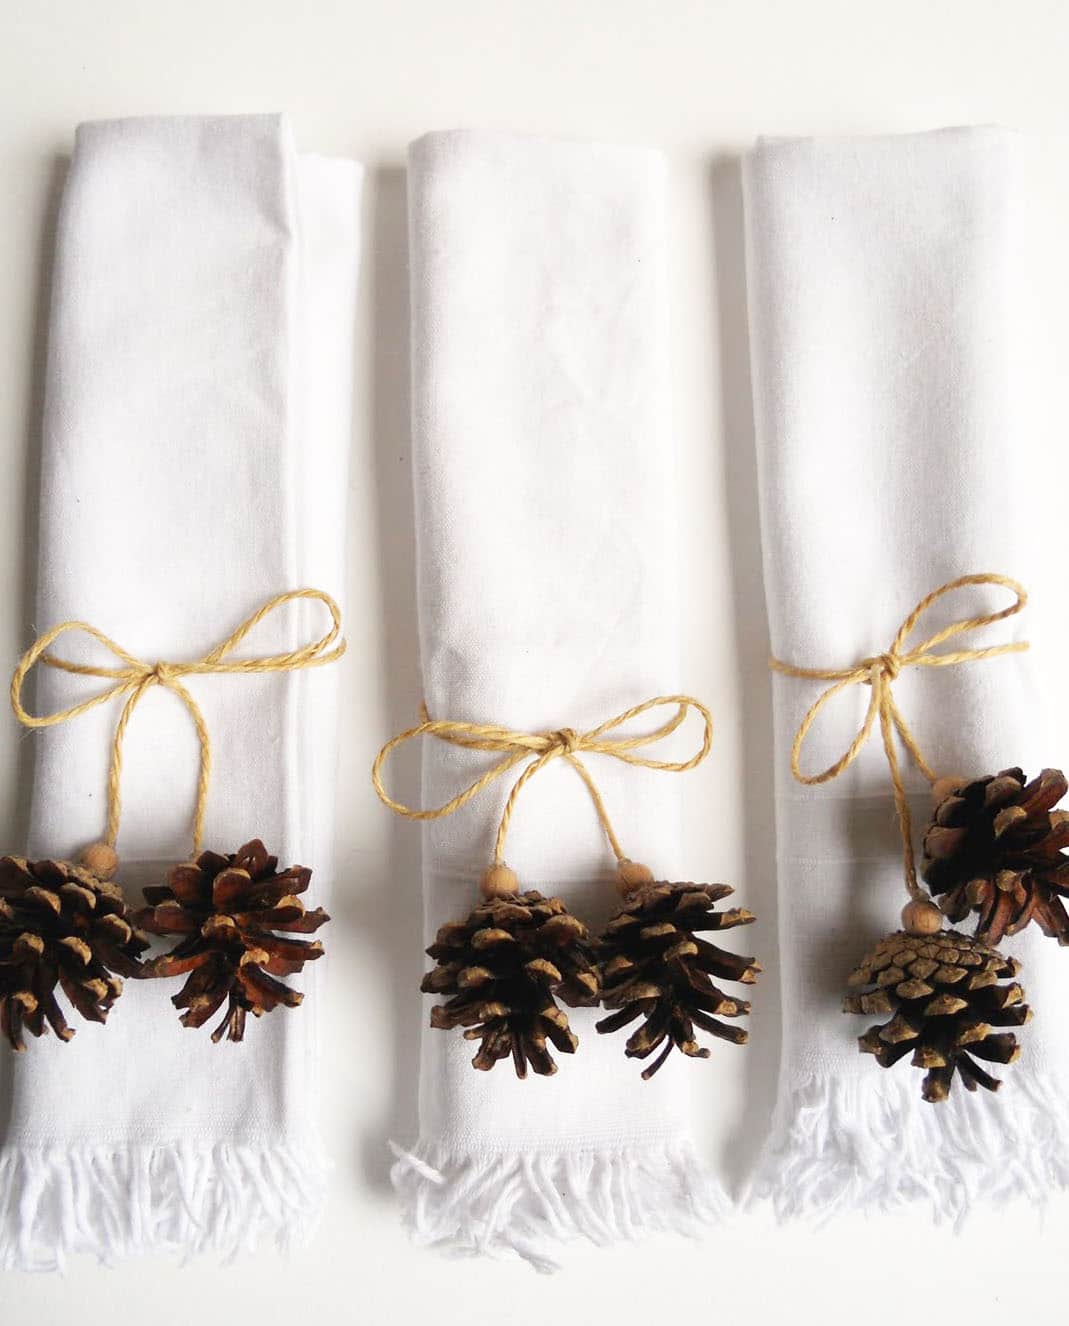 LEMONBE-Cómo arreglar tus servilletas en la cena de Navidad-04